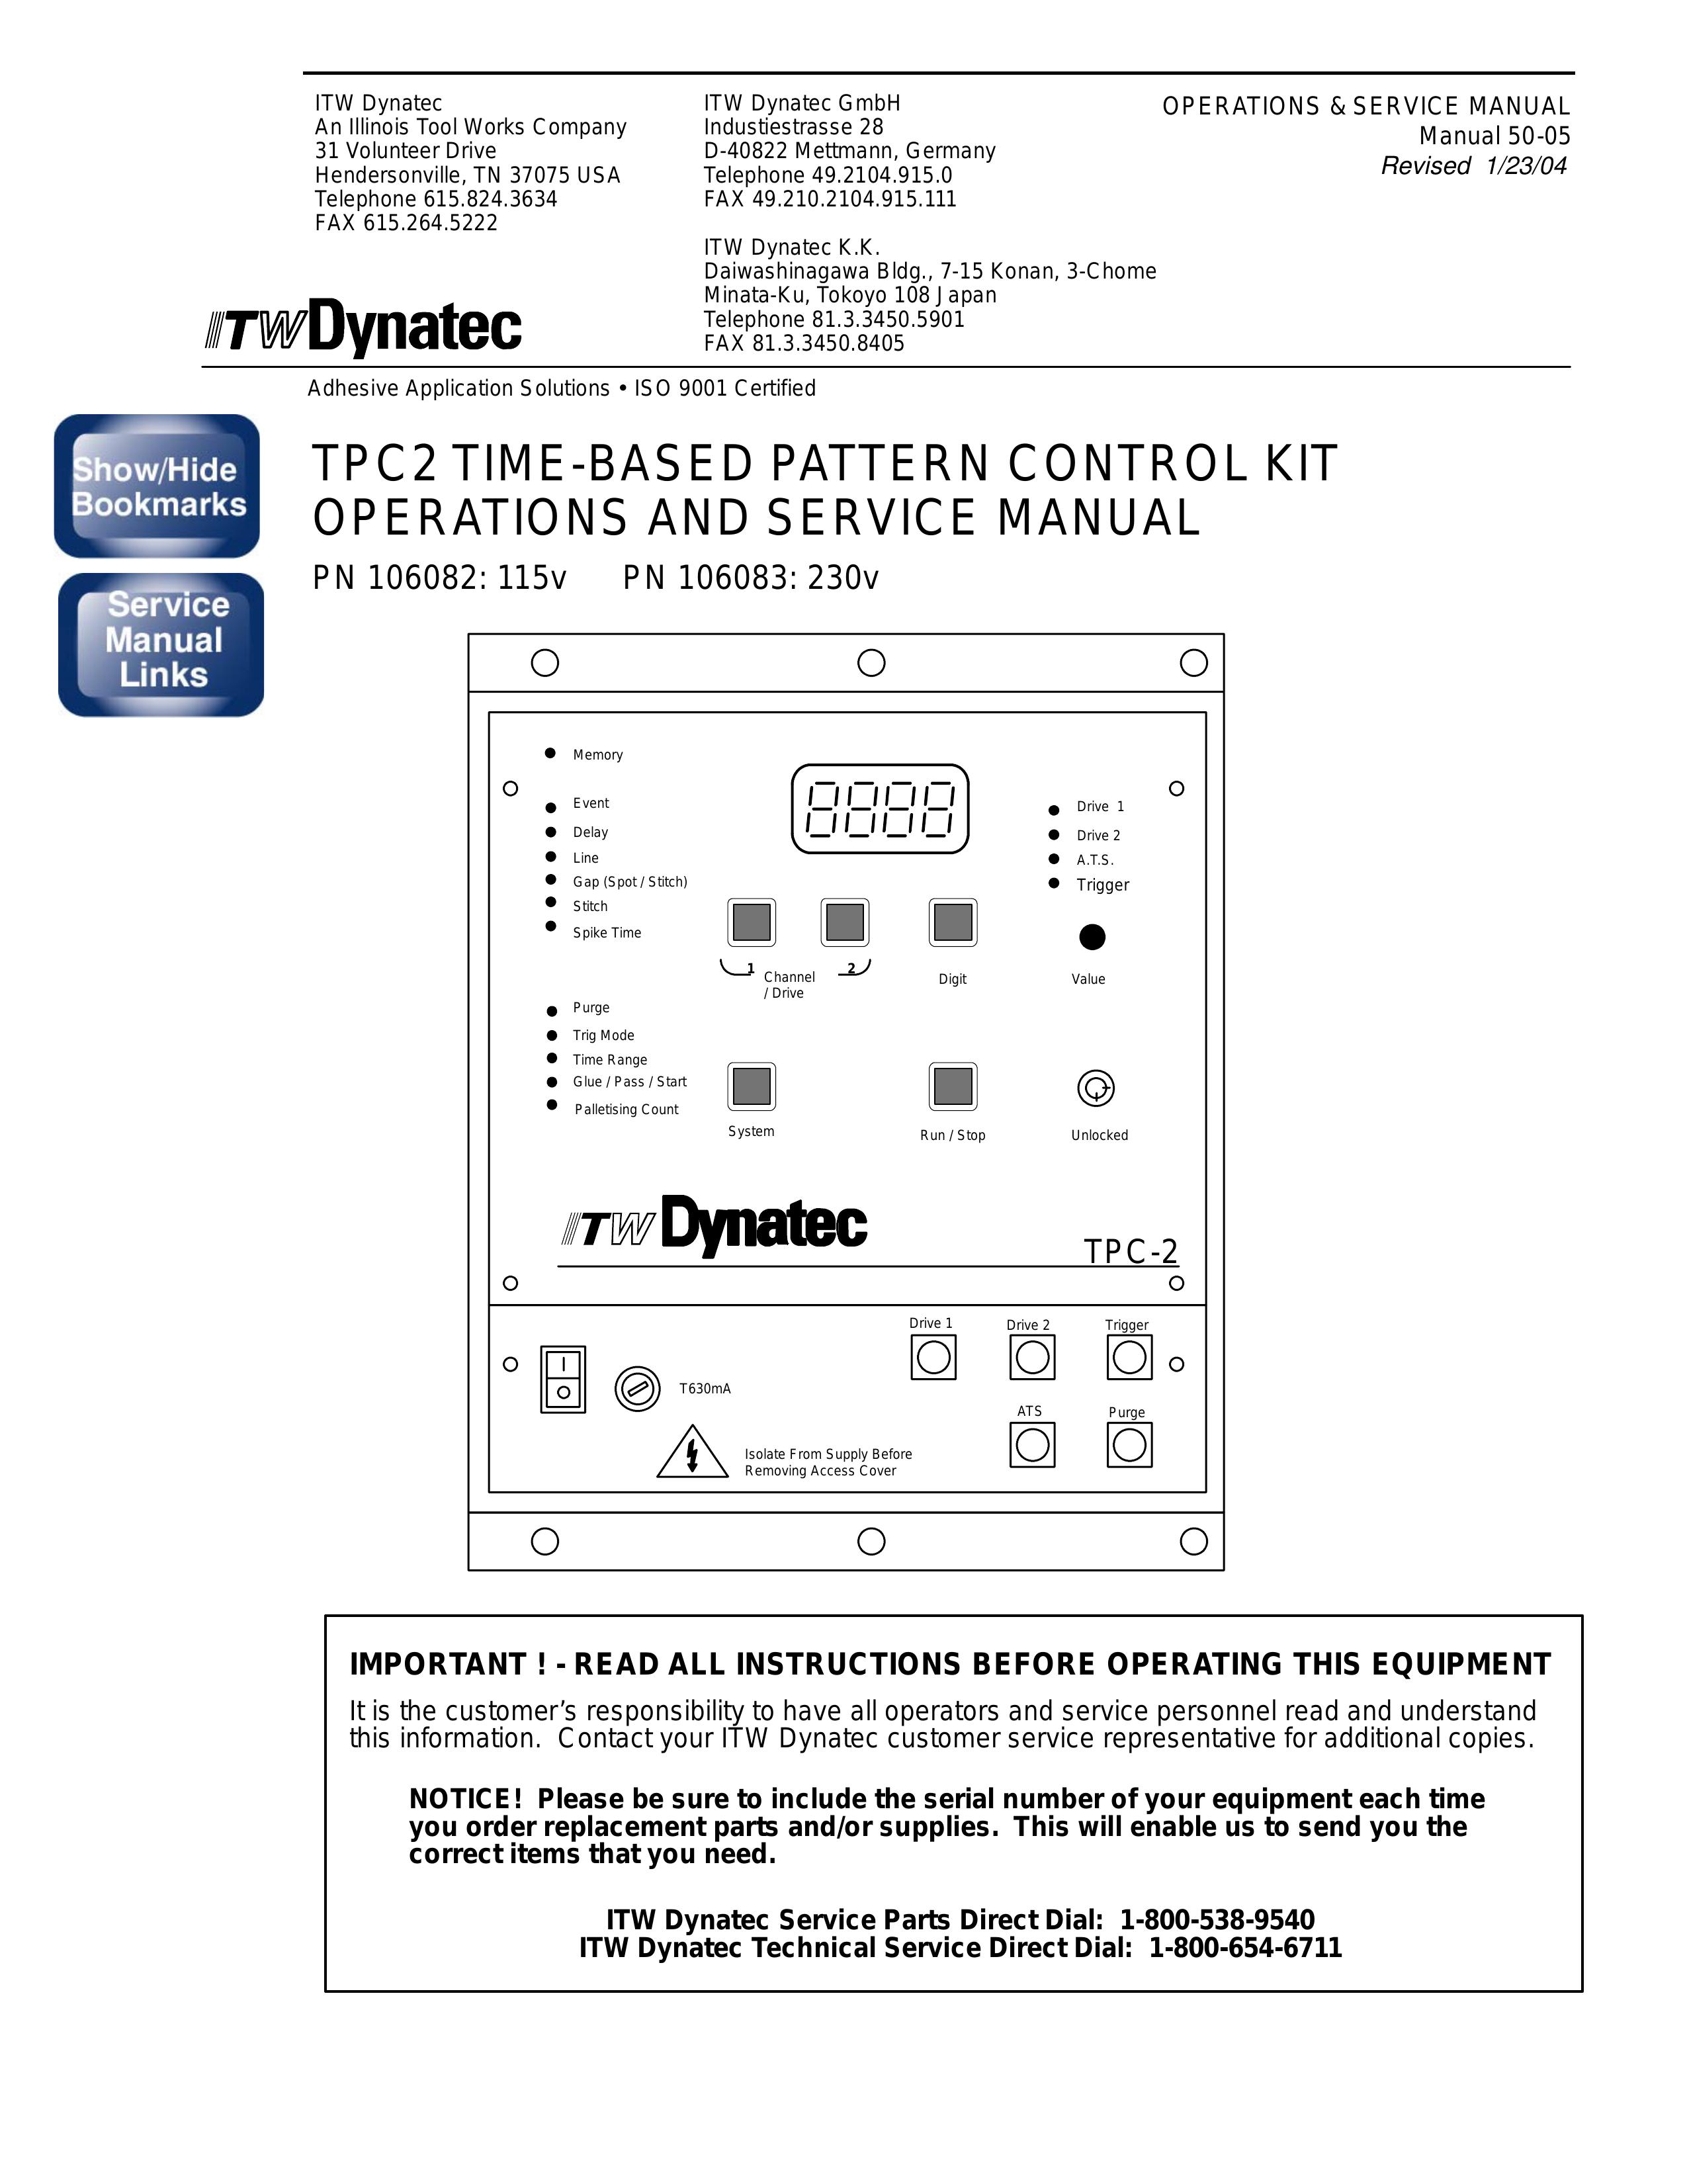 Dynatech PN 106082: 115v Pill Reminder Device User Manual